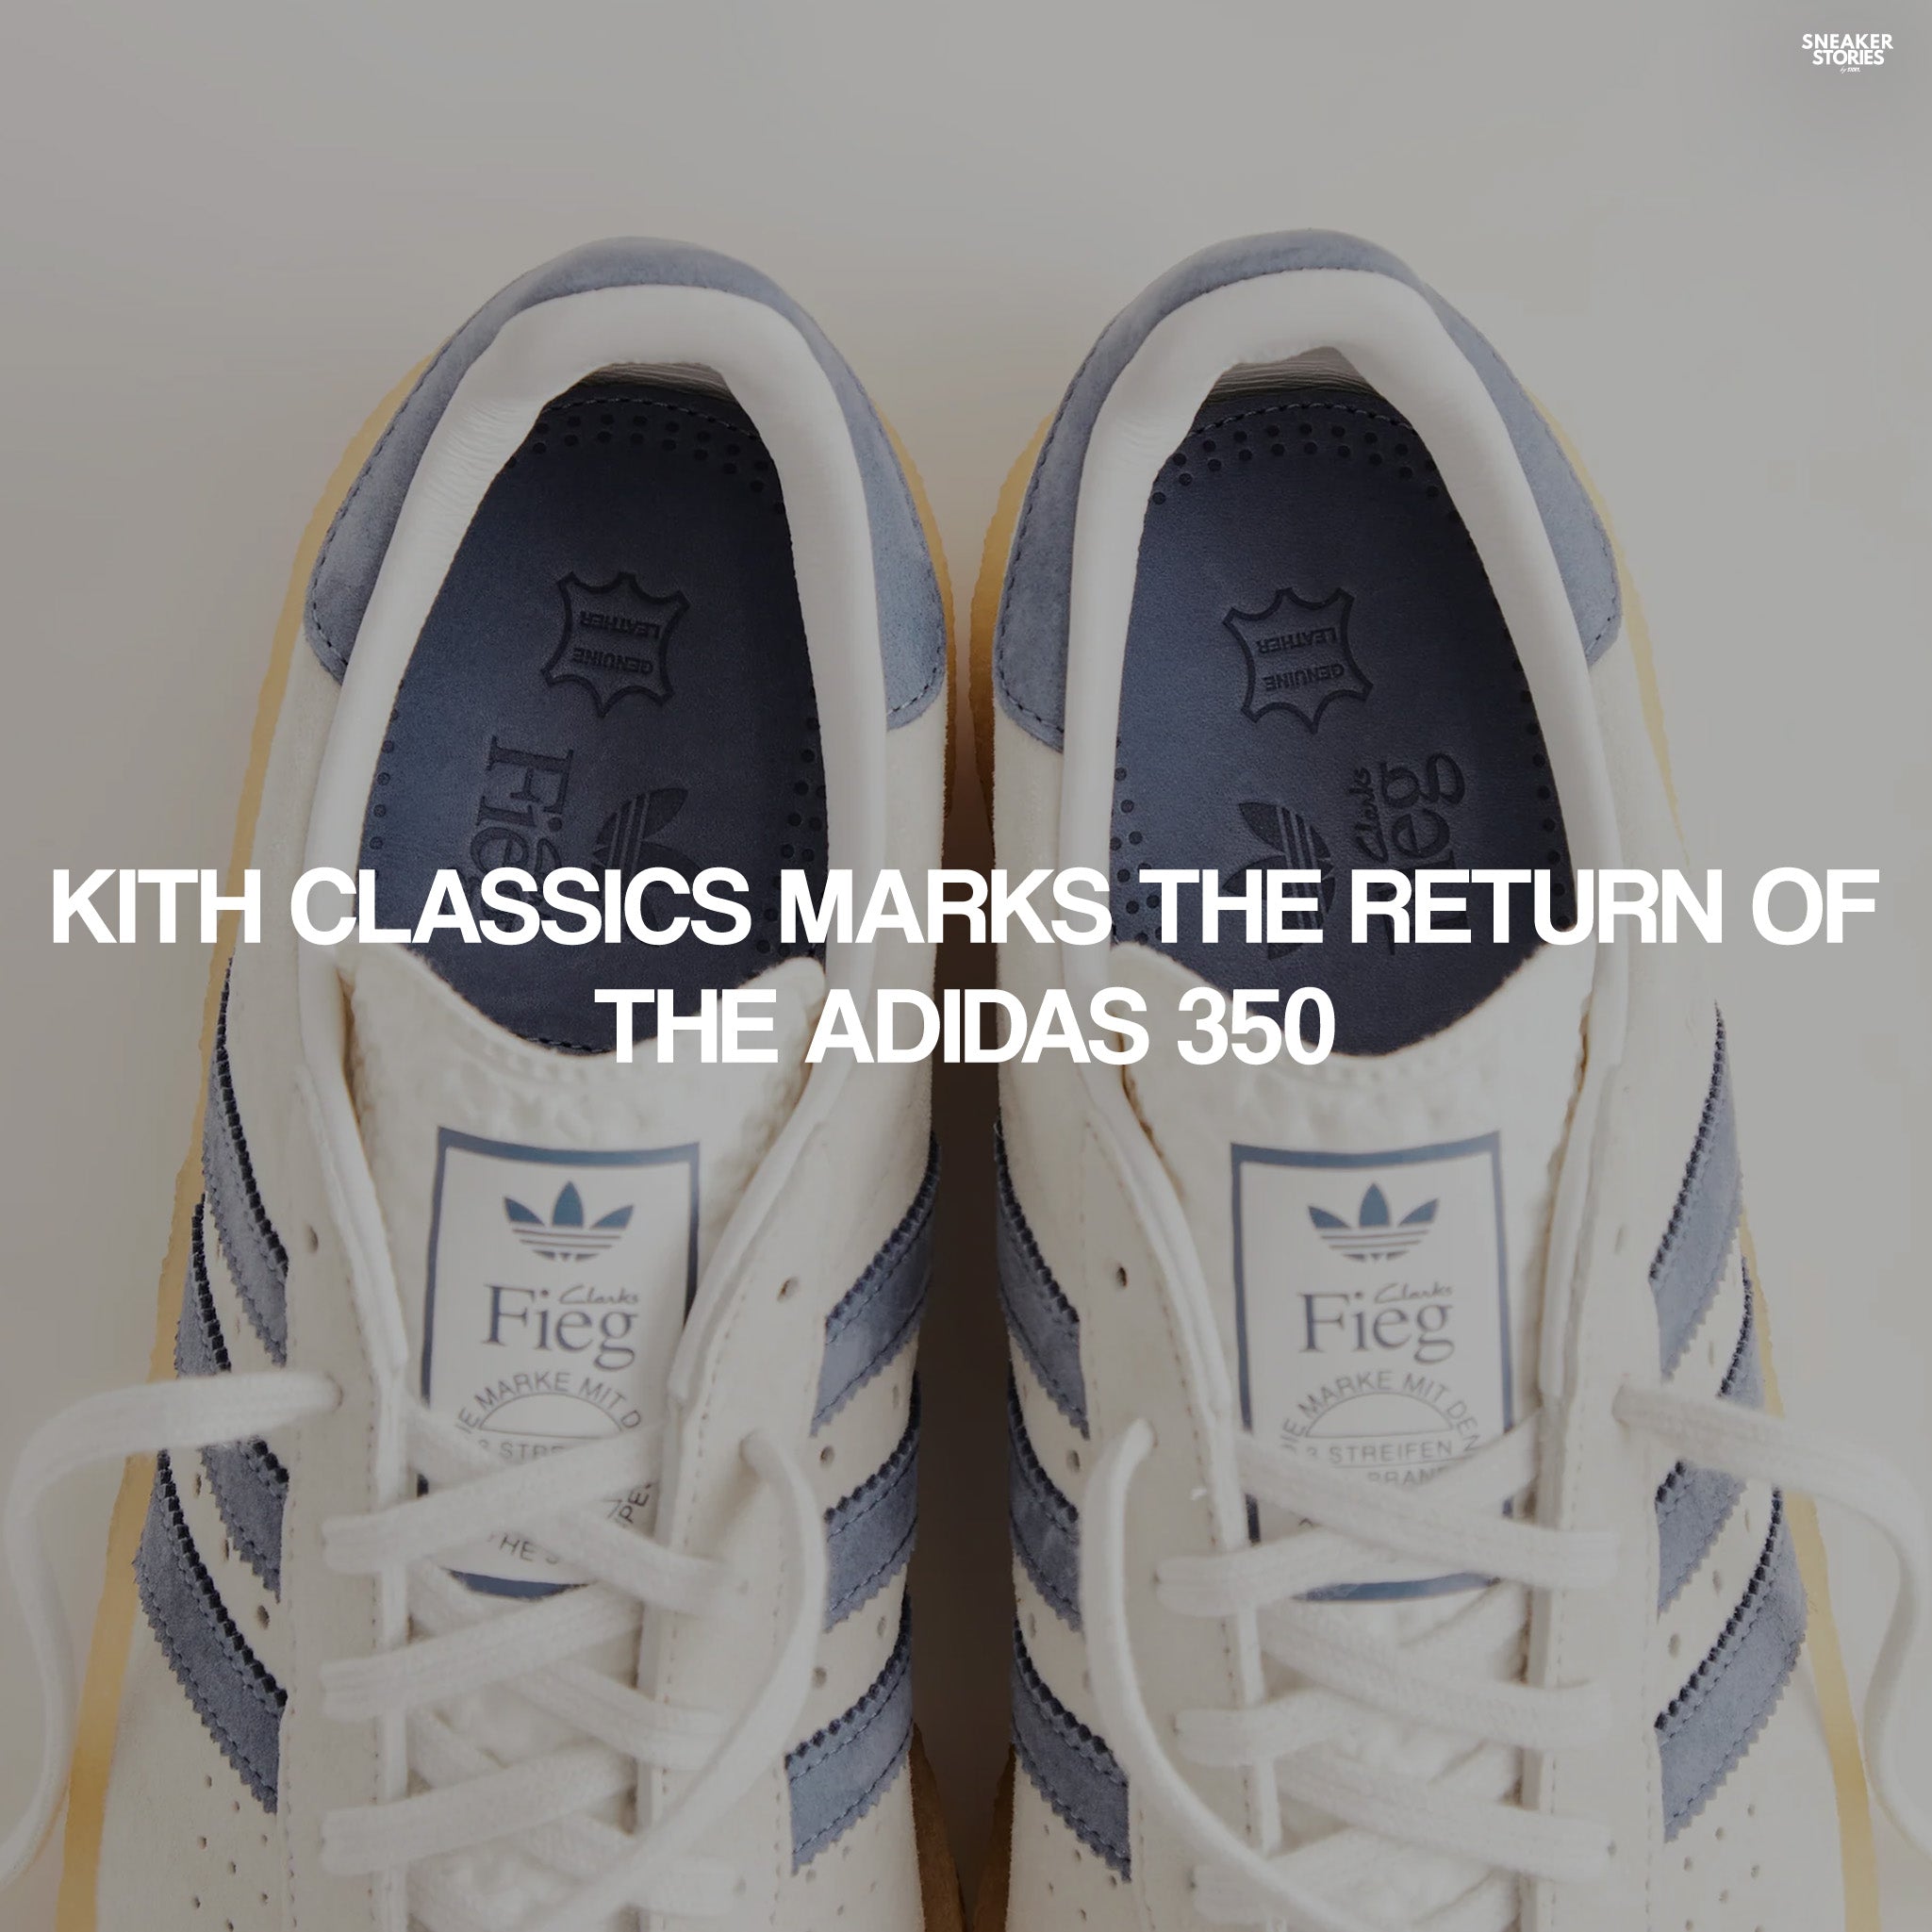 Kith Classics marks the return of the Adidas 350